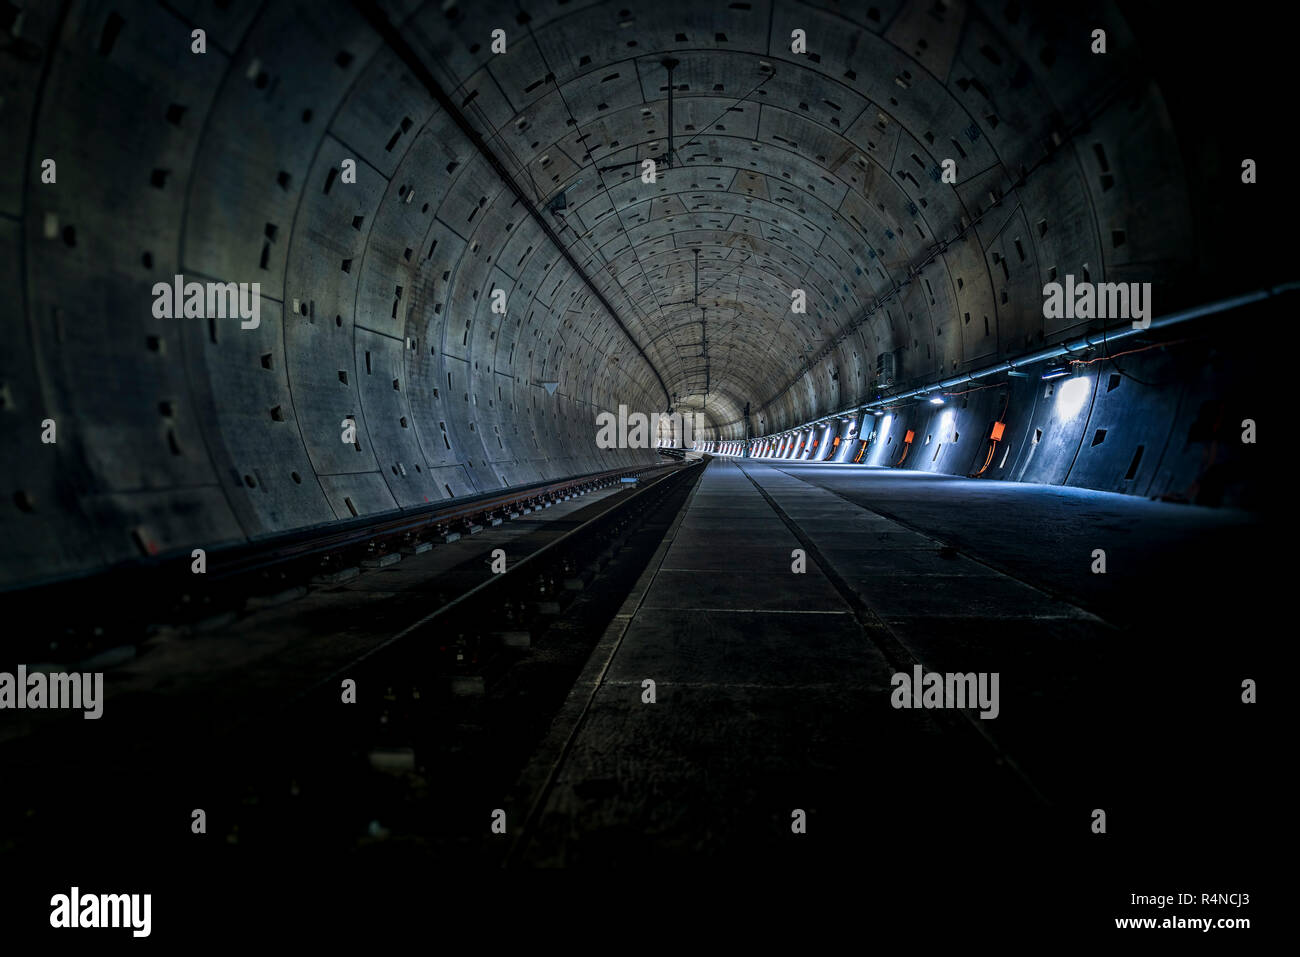 underground shaft with track and emergency lighting Stock Photo